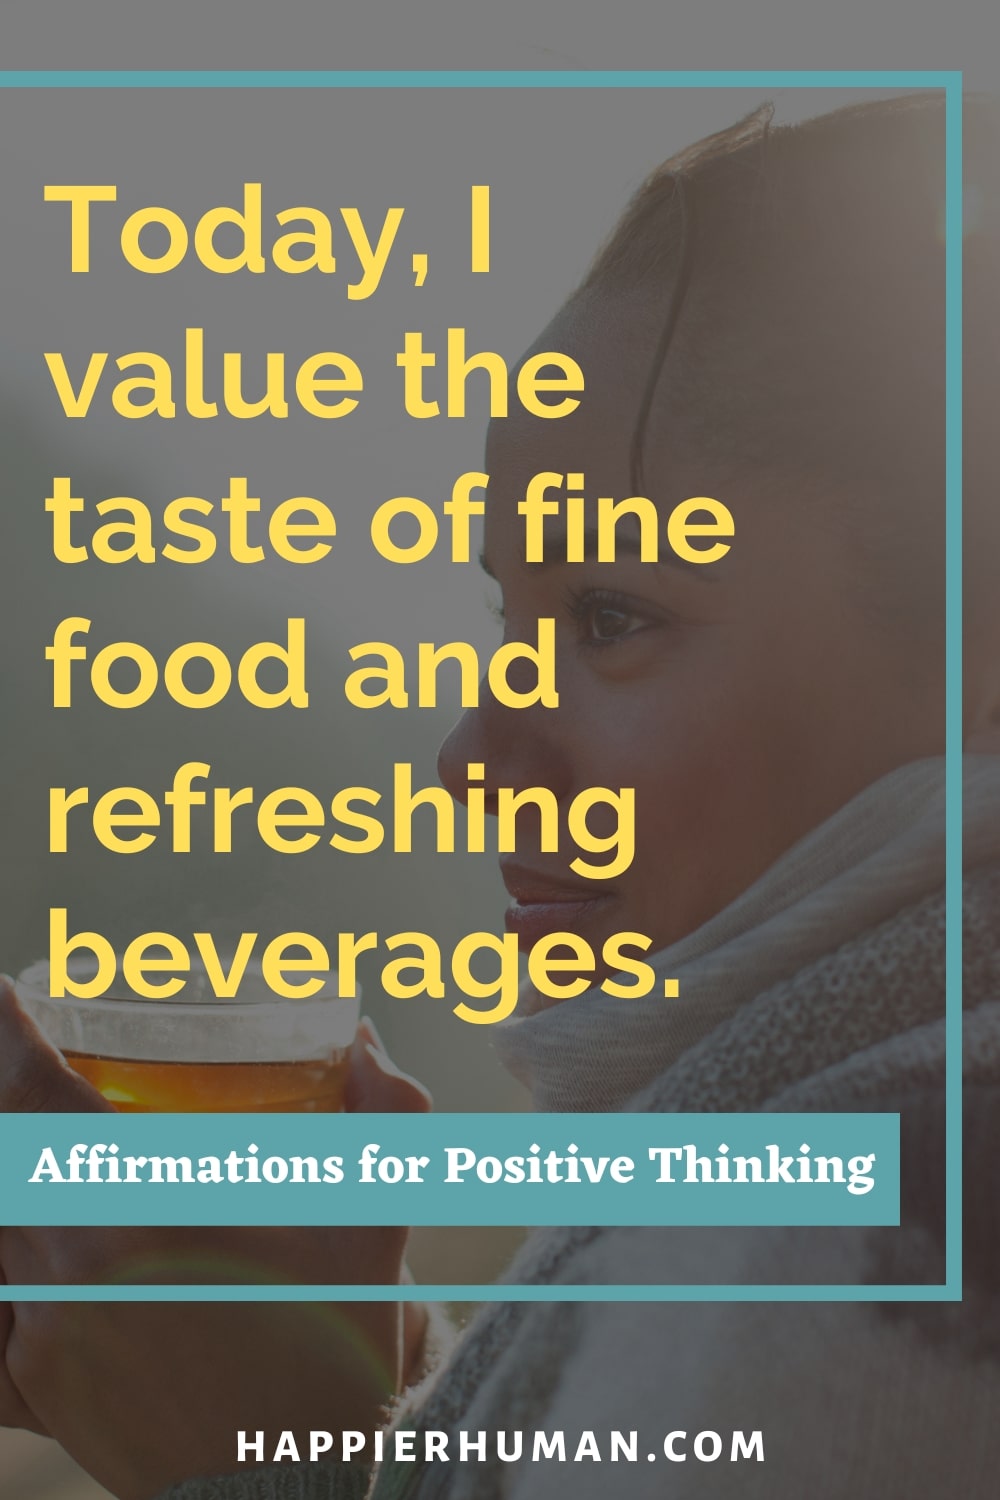 affirmation for positive thinking | positive thinking happy affirmations | affirmations for positive thinking morning